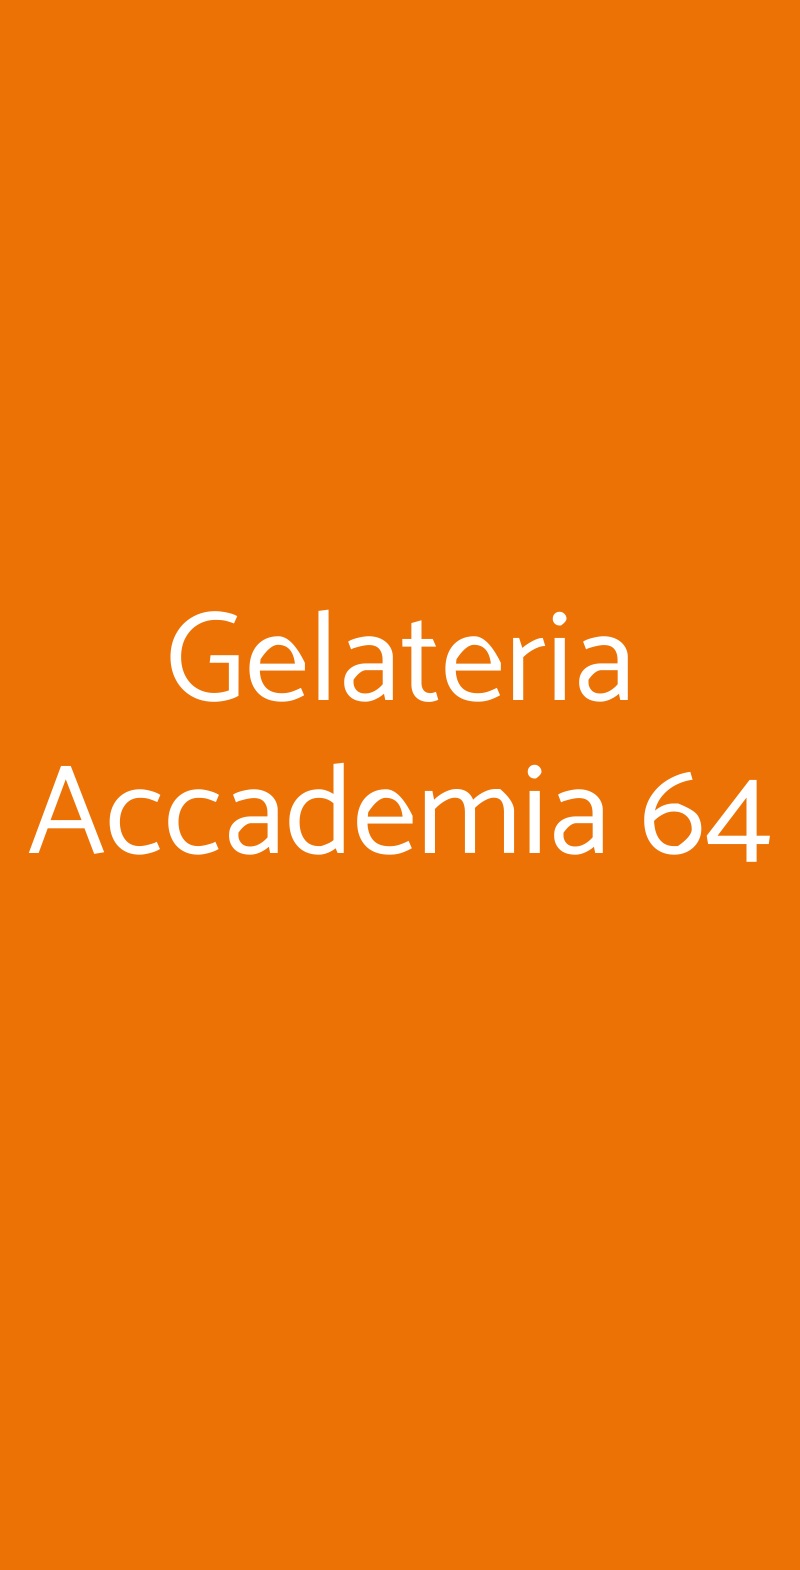 Gelateria Accademia 64 Milano menù 1 pagina